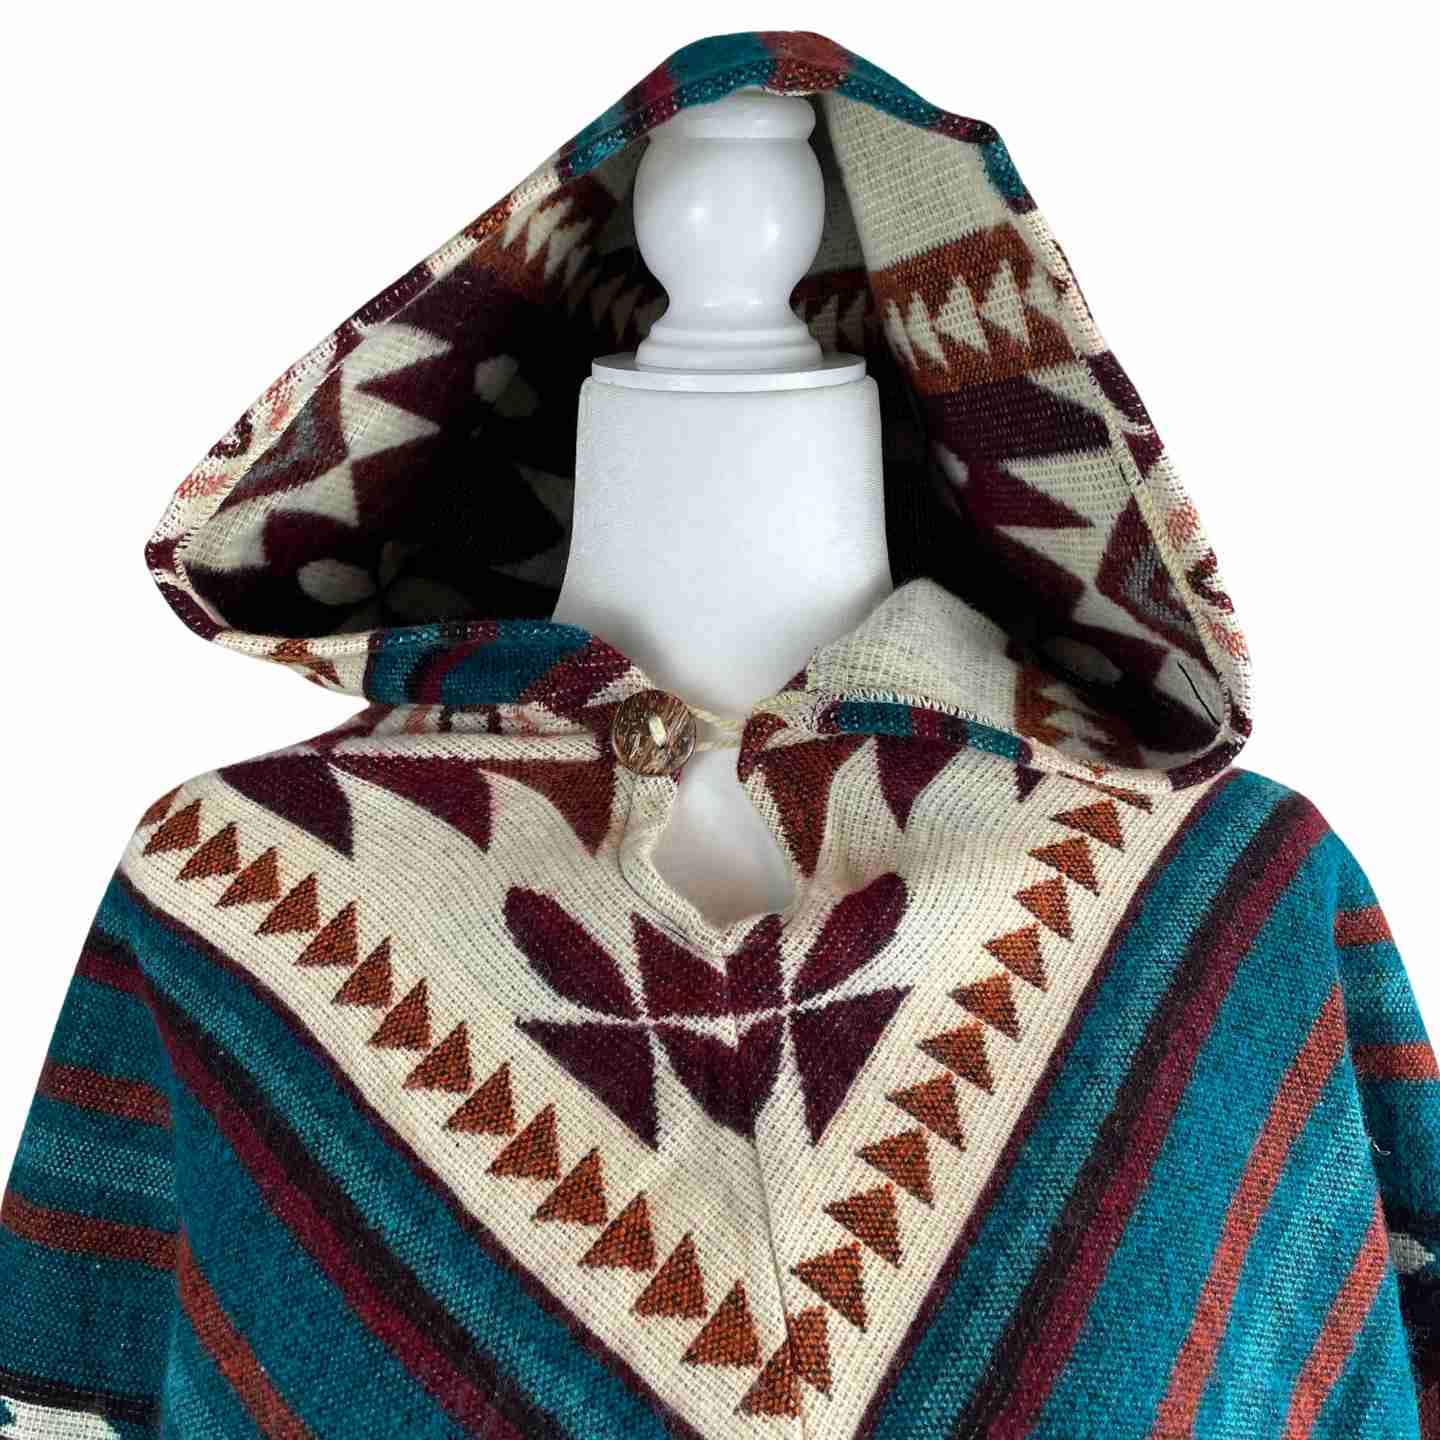 Warm Cozy Boho Alpaca Wool Hooded Poncho - Winter Soft Outerwear for Women, Dark Teal V Style Cape with Peanut Tassels